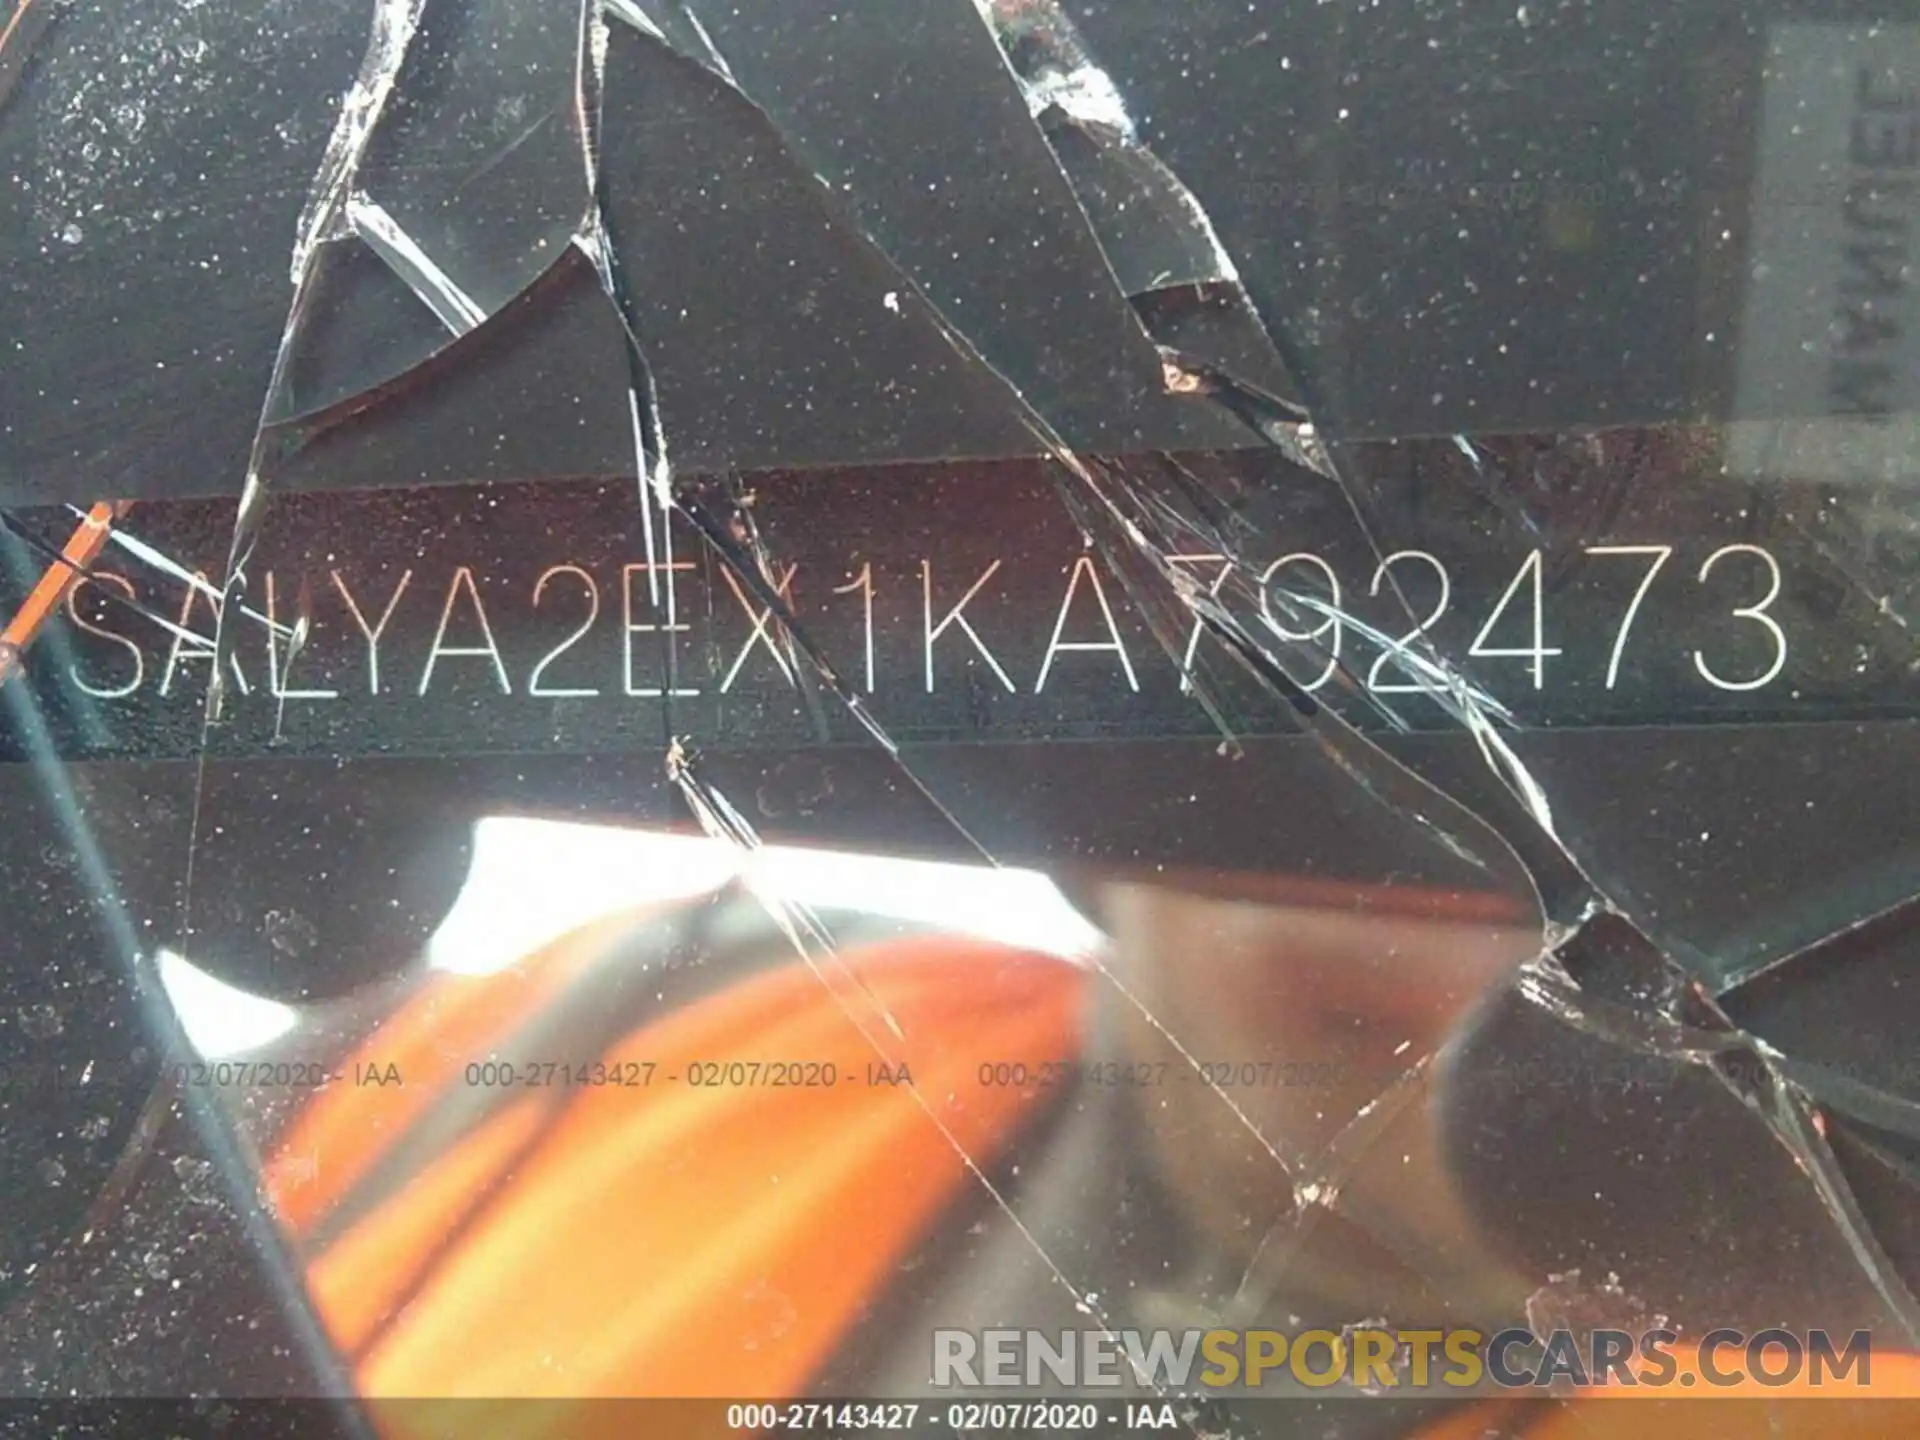 9 Photograph of a damaged car SALYA2EX1KA792473 LAND ROVER RANGE ROVER VELAR 2019